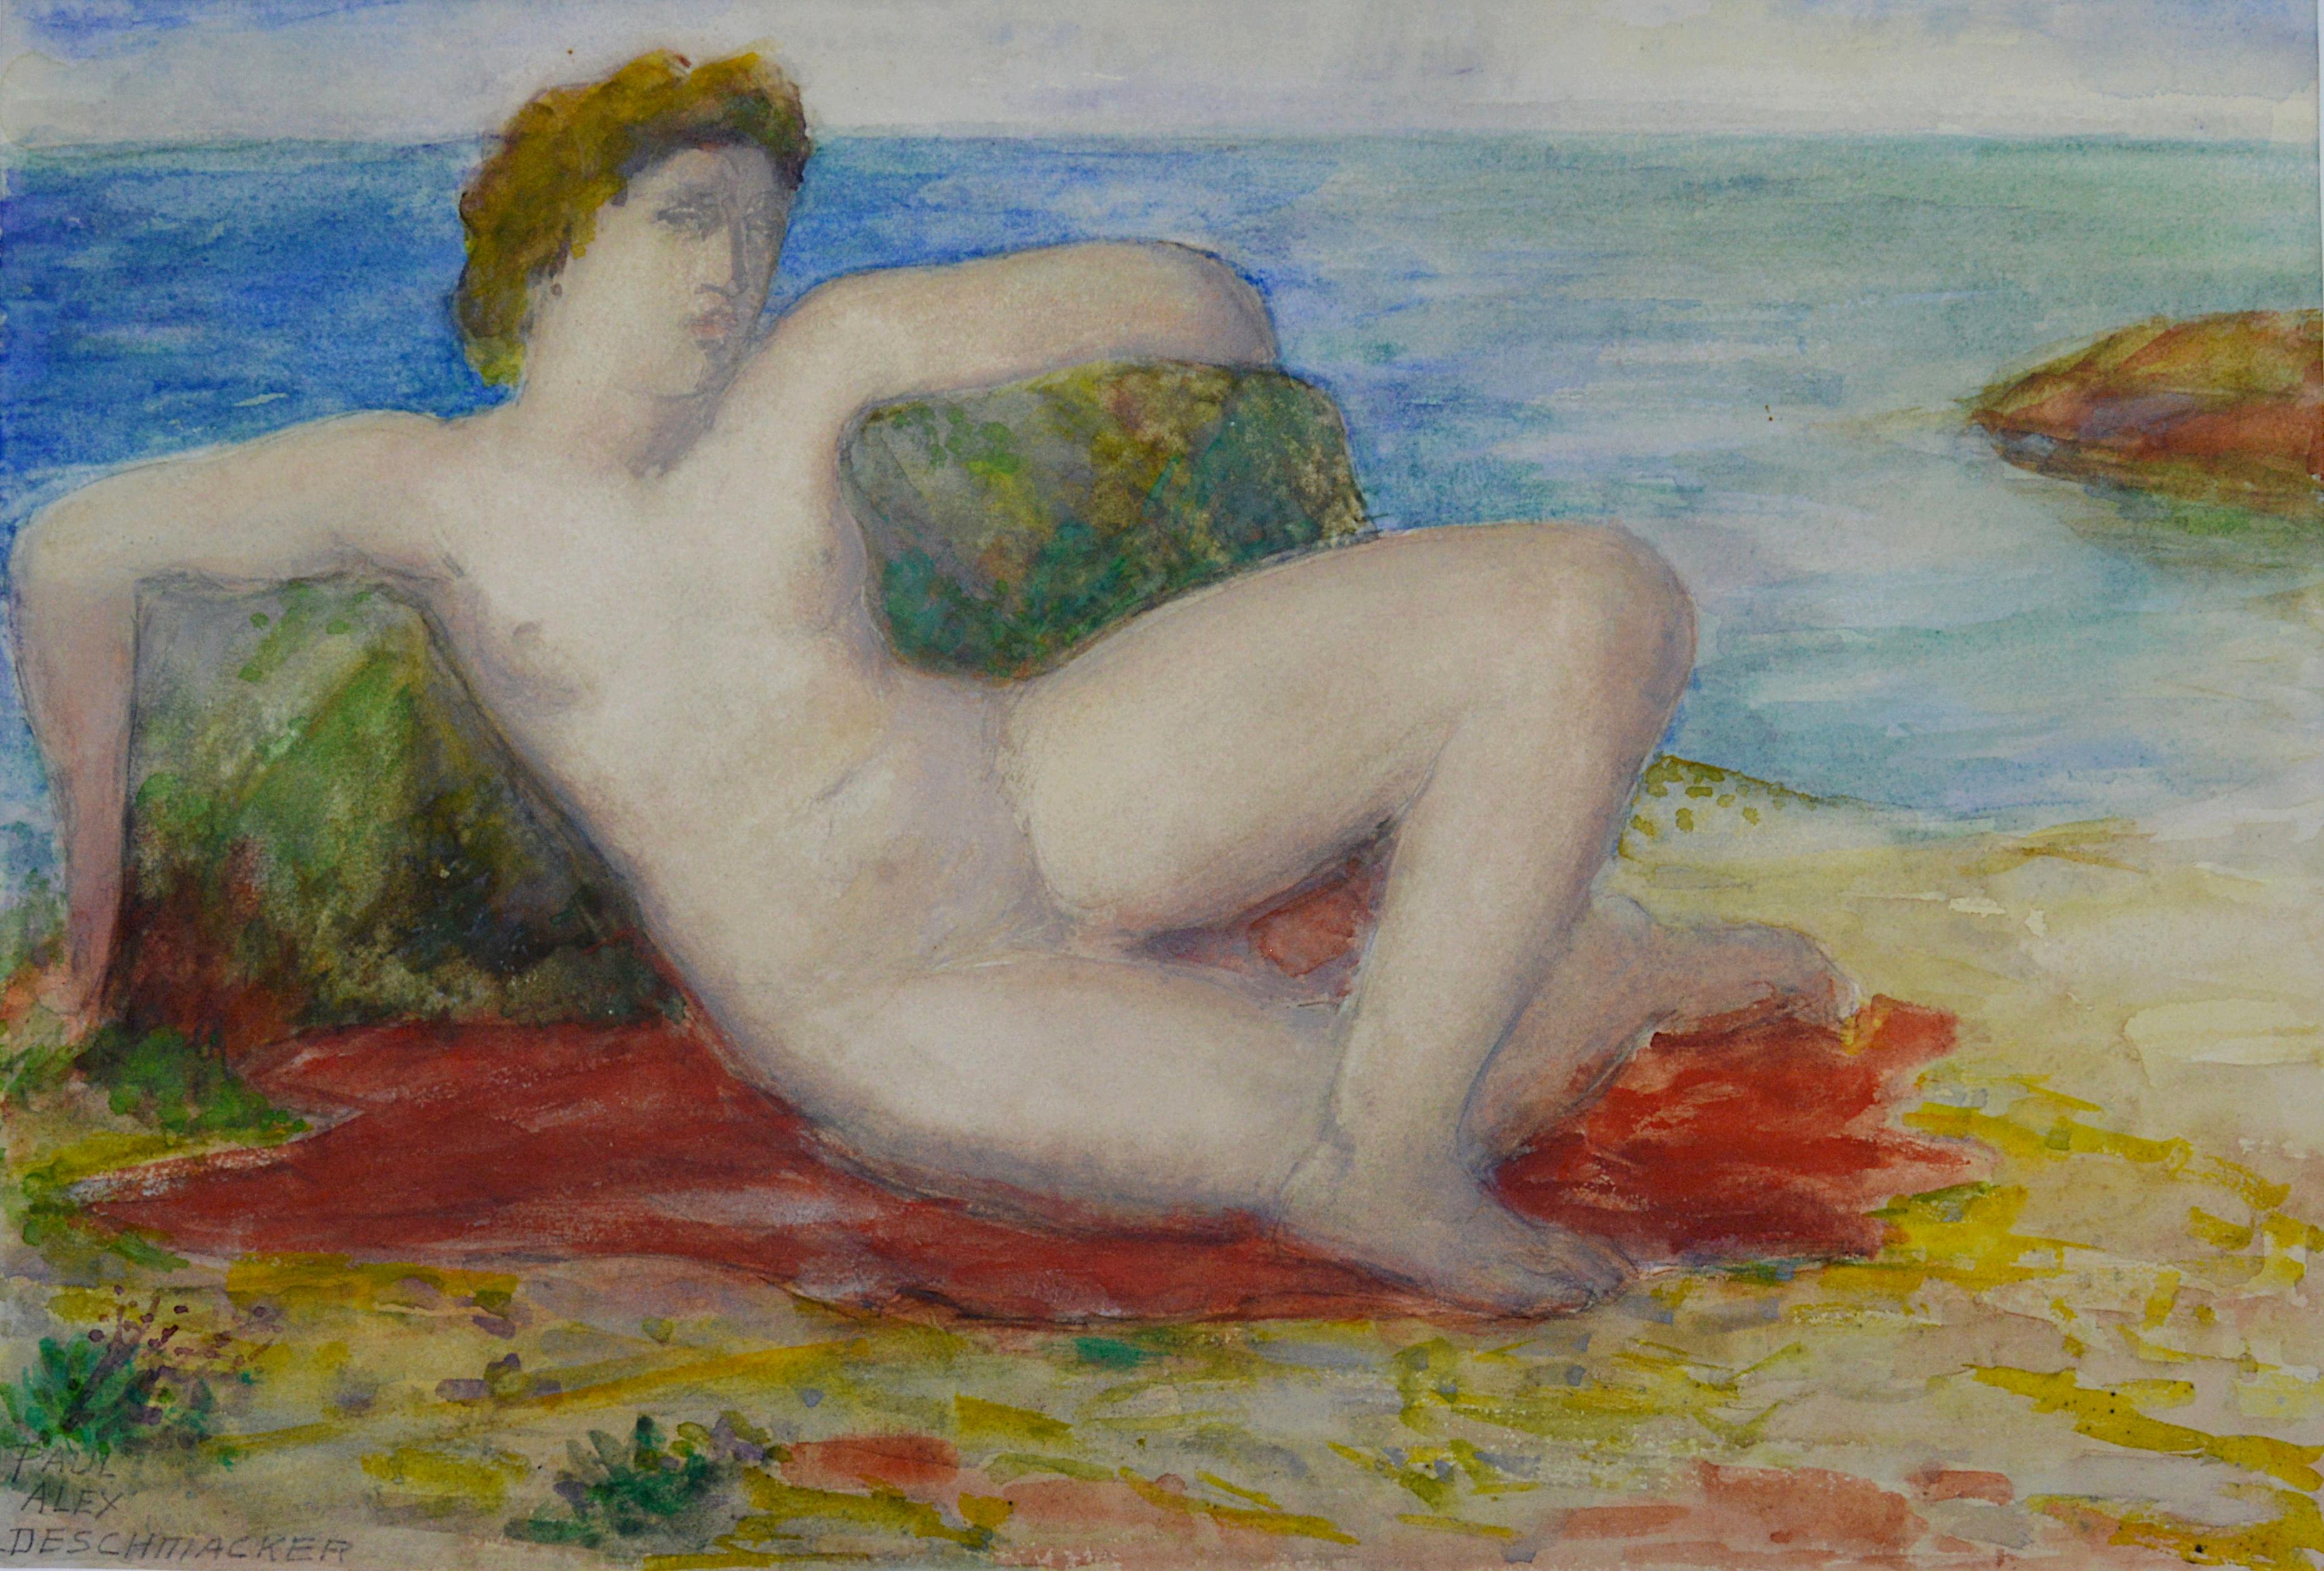 Paul Alex Deschmacker Figurative Art - Deschmacker, Young Woman Lying By The Sea, Watercolor